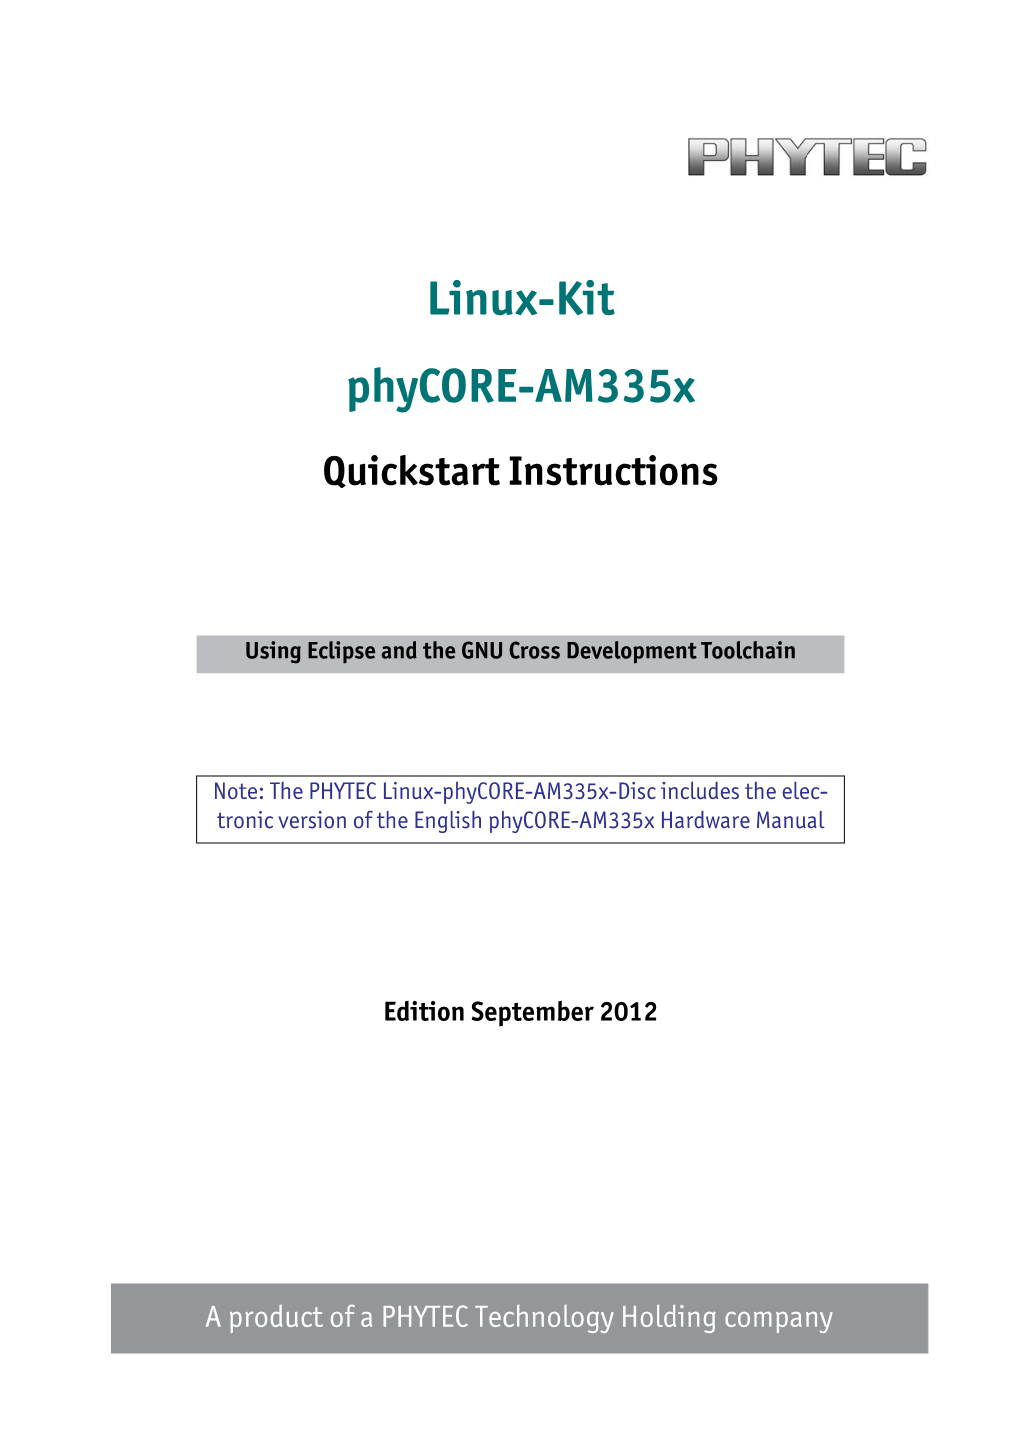 Linux-Kit Phycore-Am335x Quickstart Instructions